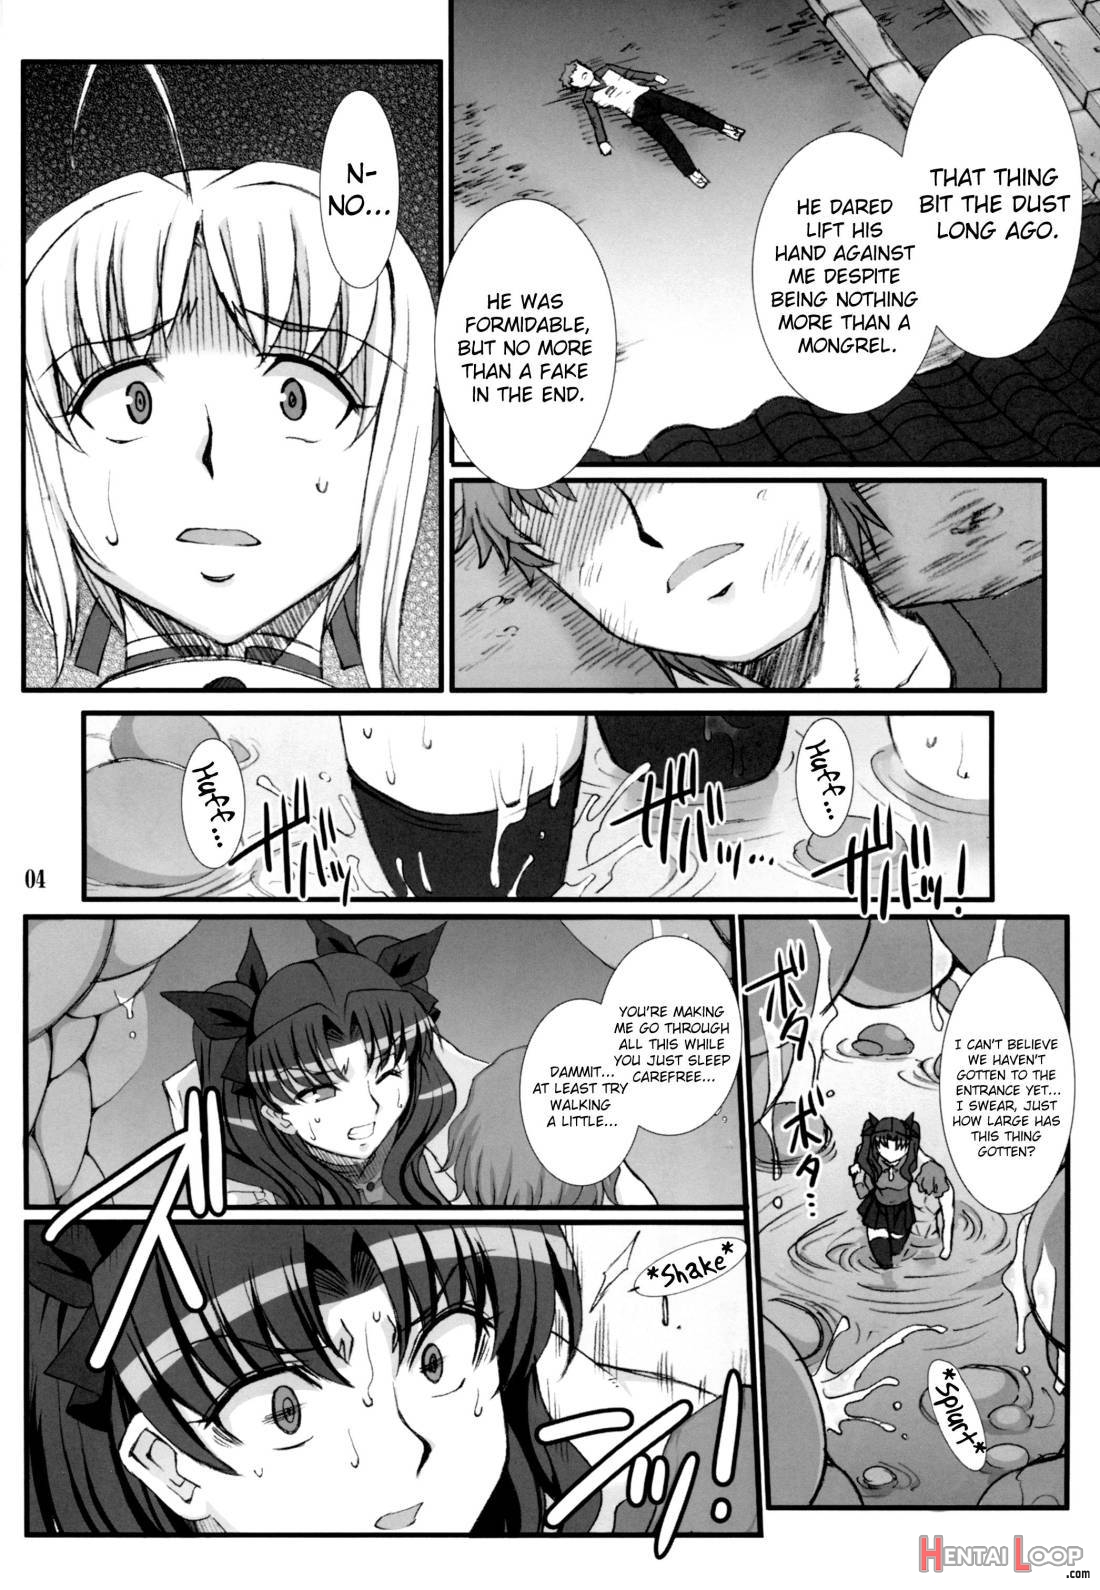 Rin Kai -Kegasareta Aka- page 4